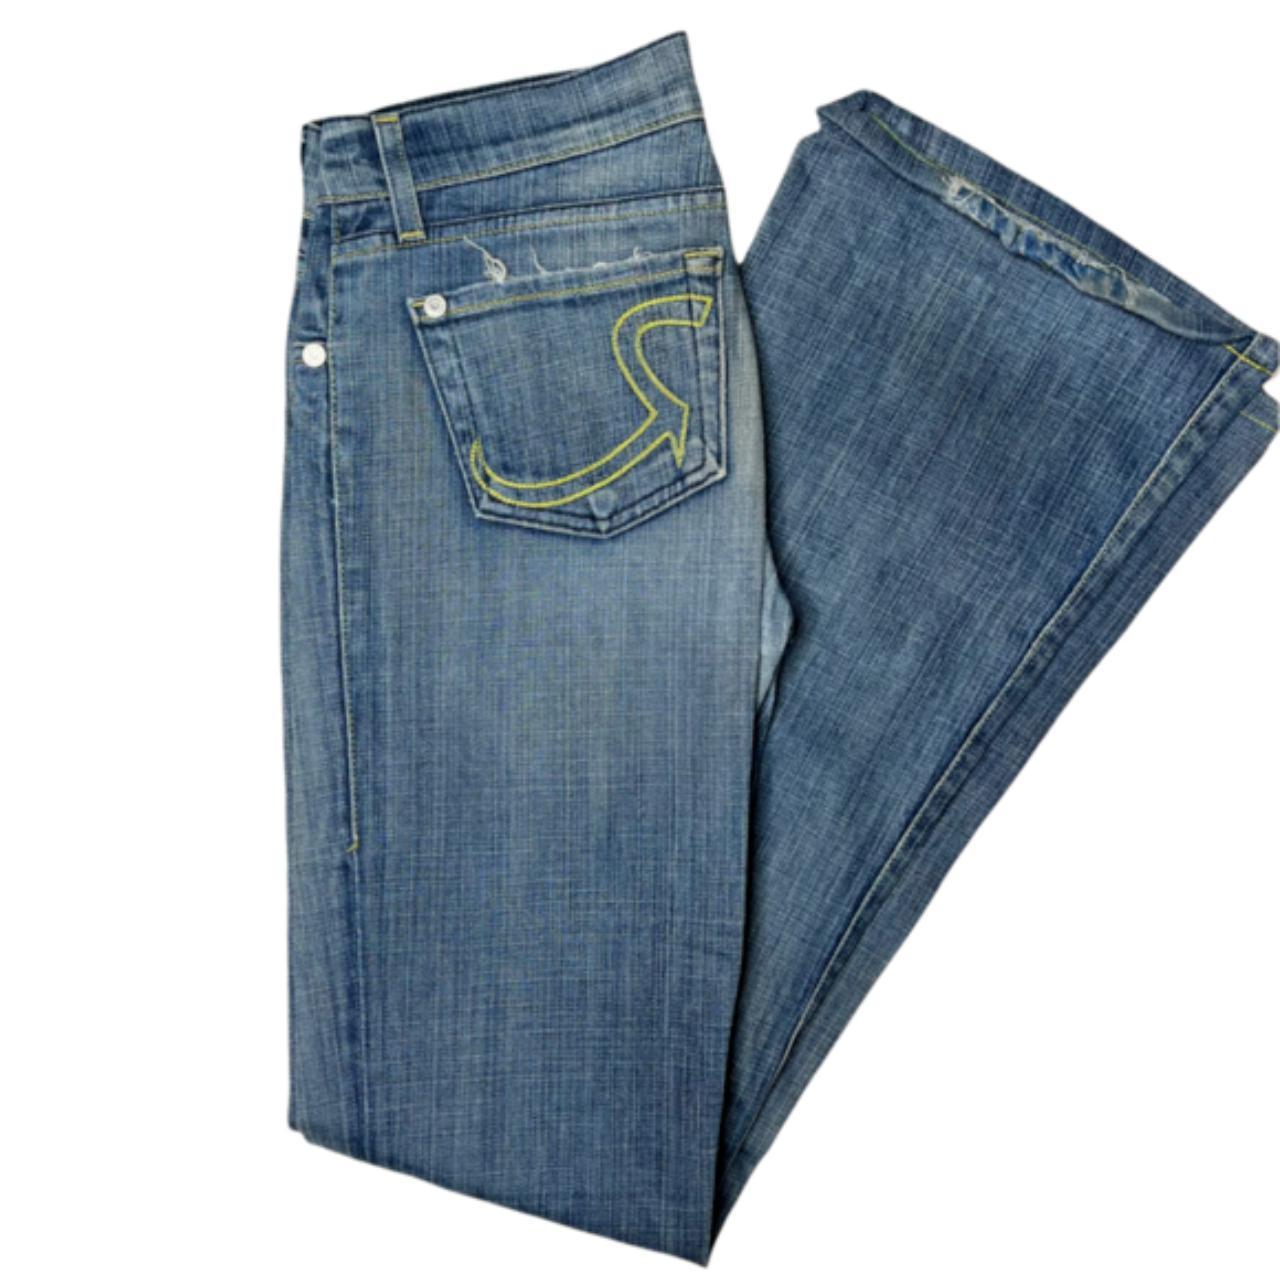 Product Image 3 - Rock & Republic Bootcut Jeans
pre